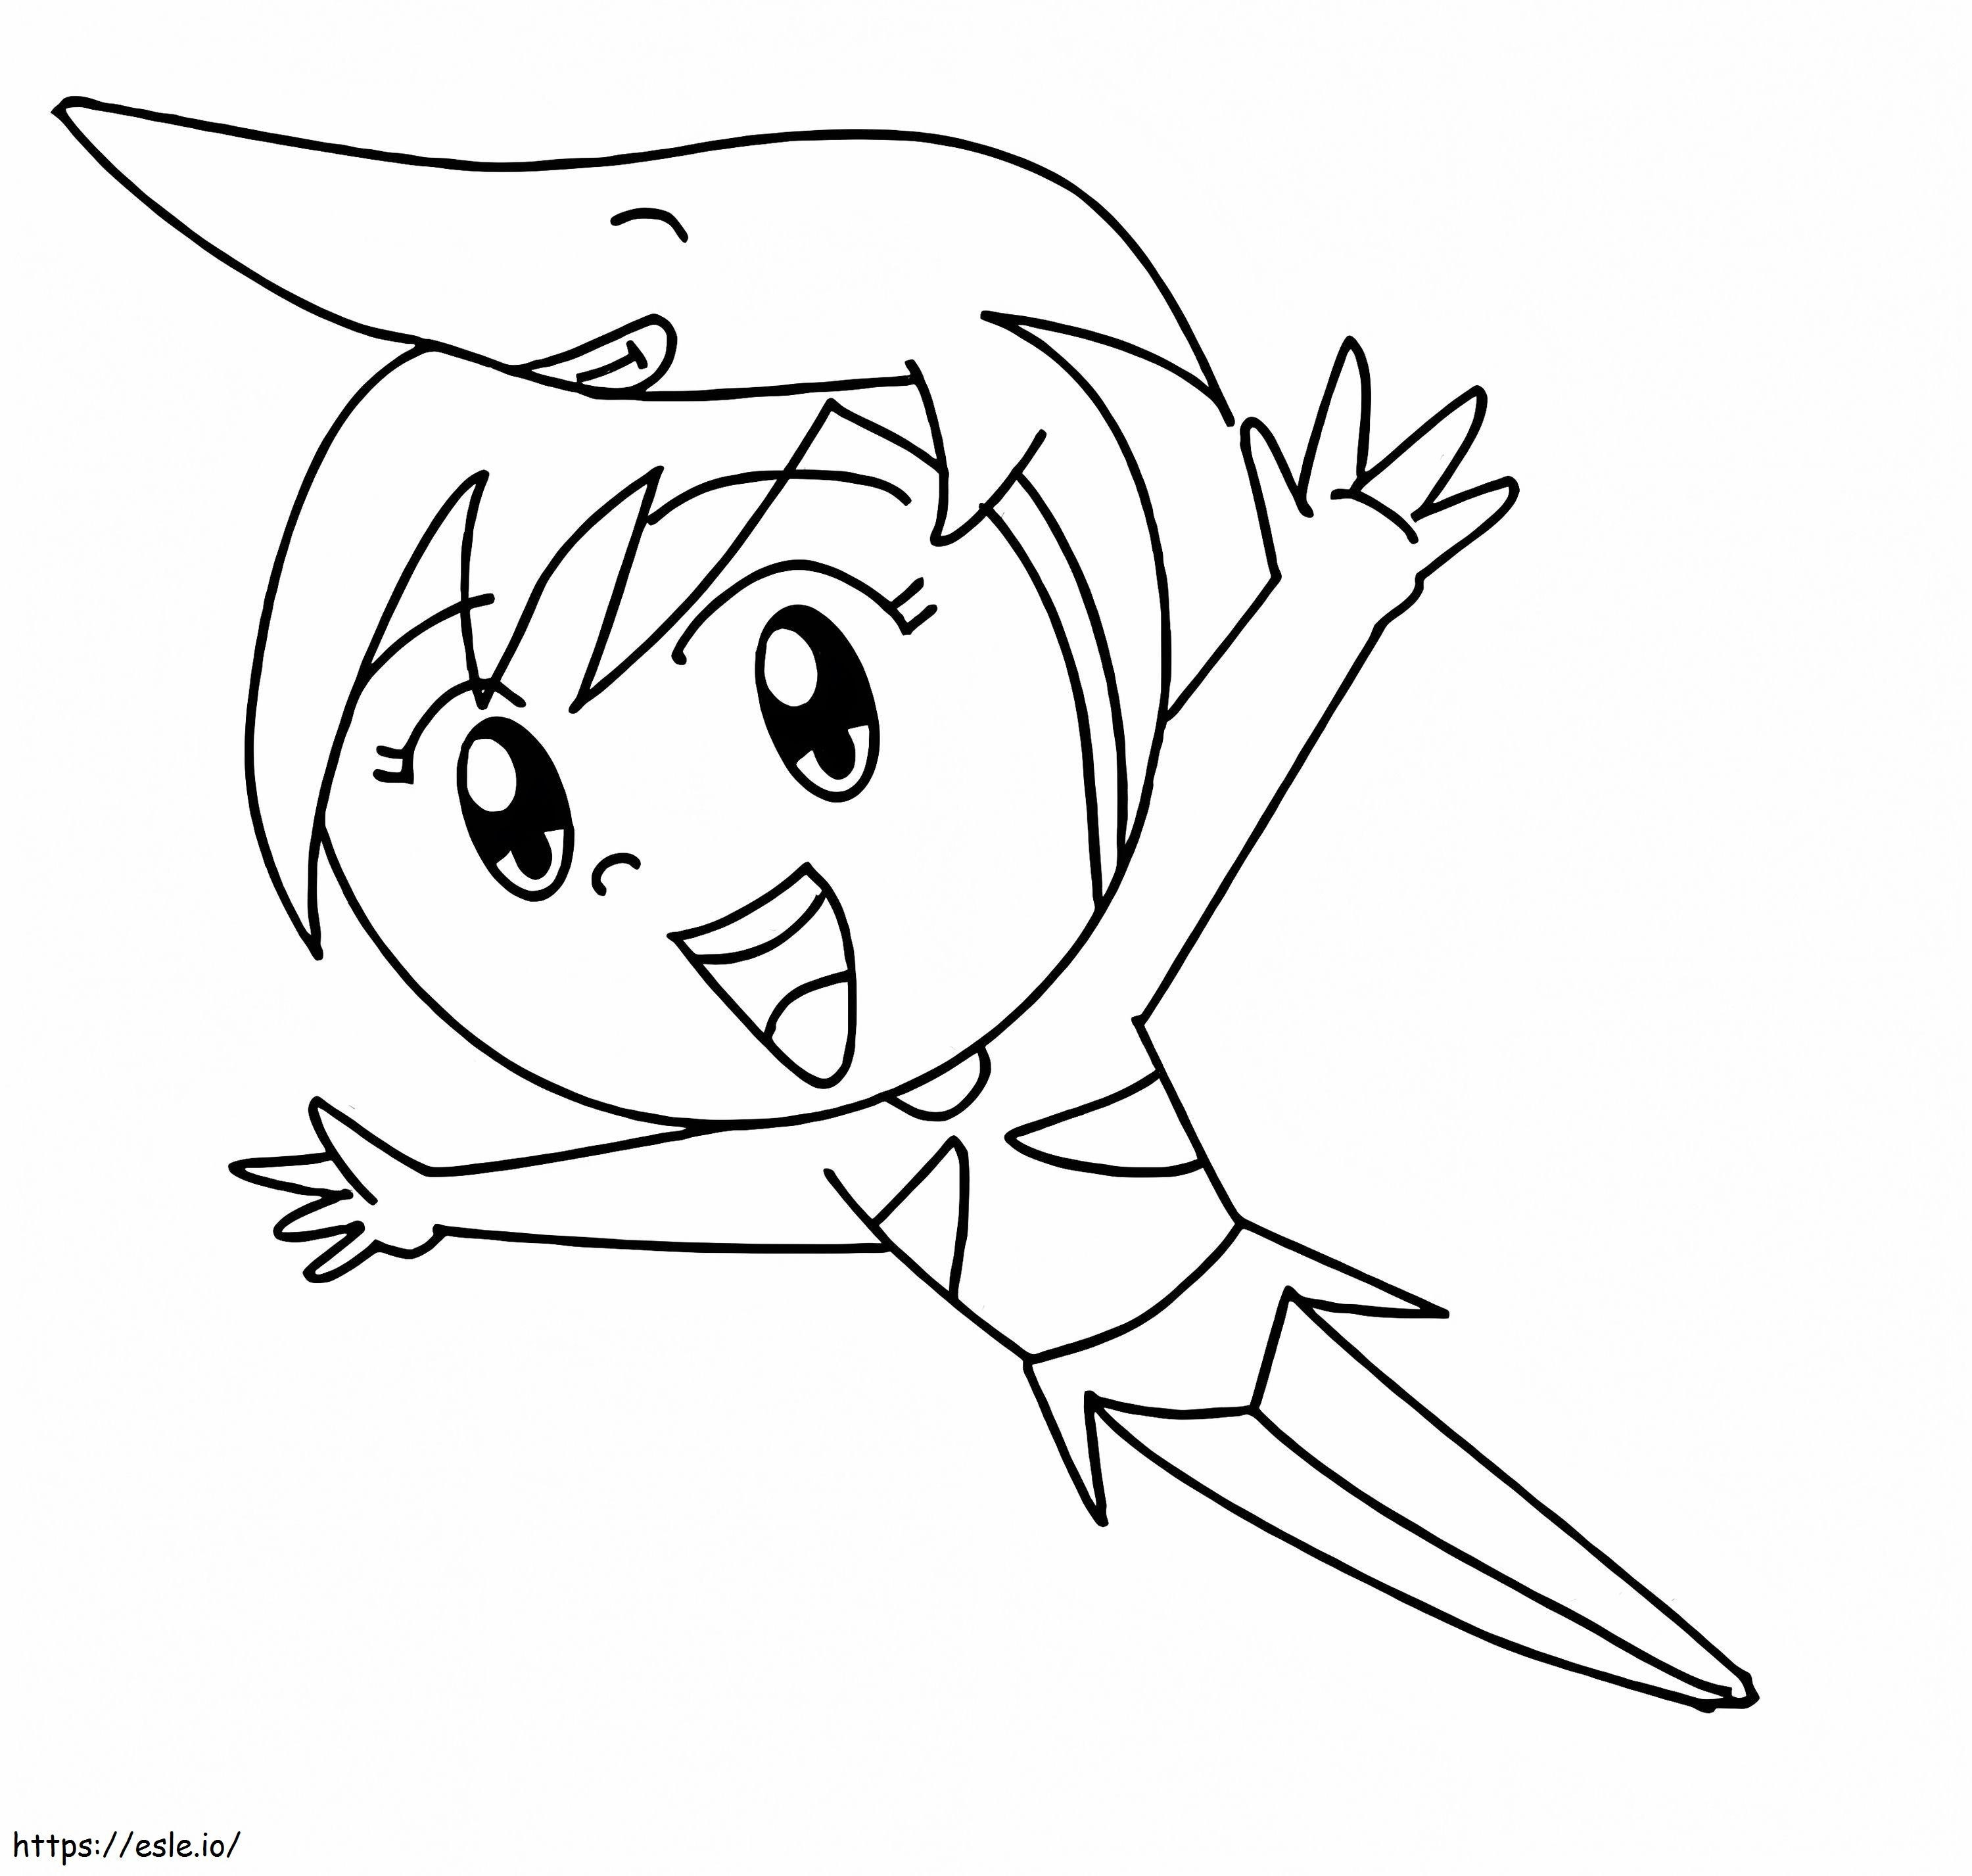 Marli The Swordfish Princess coloring page